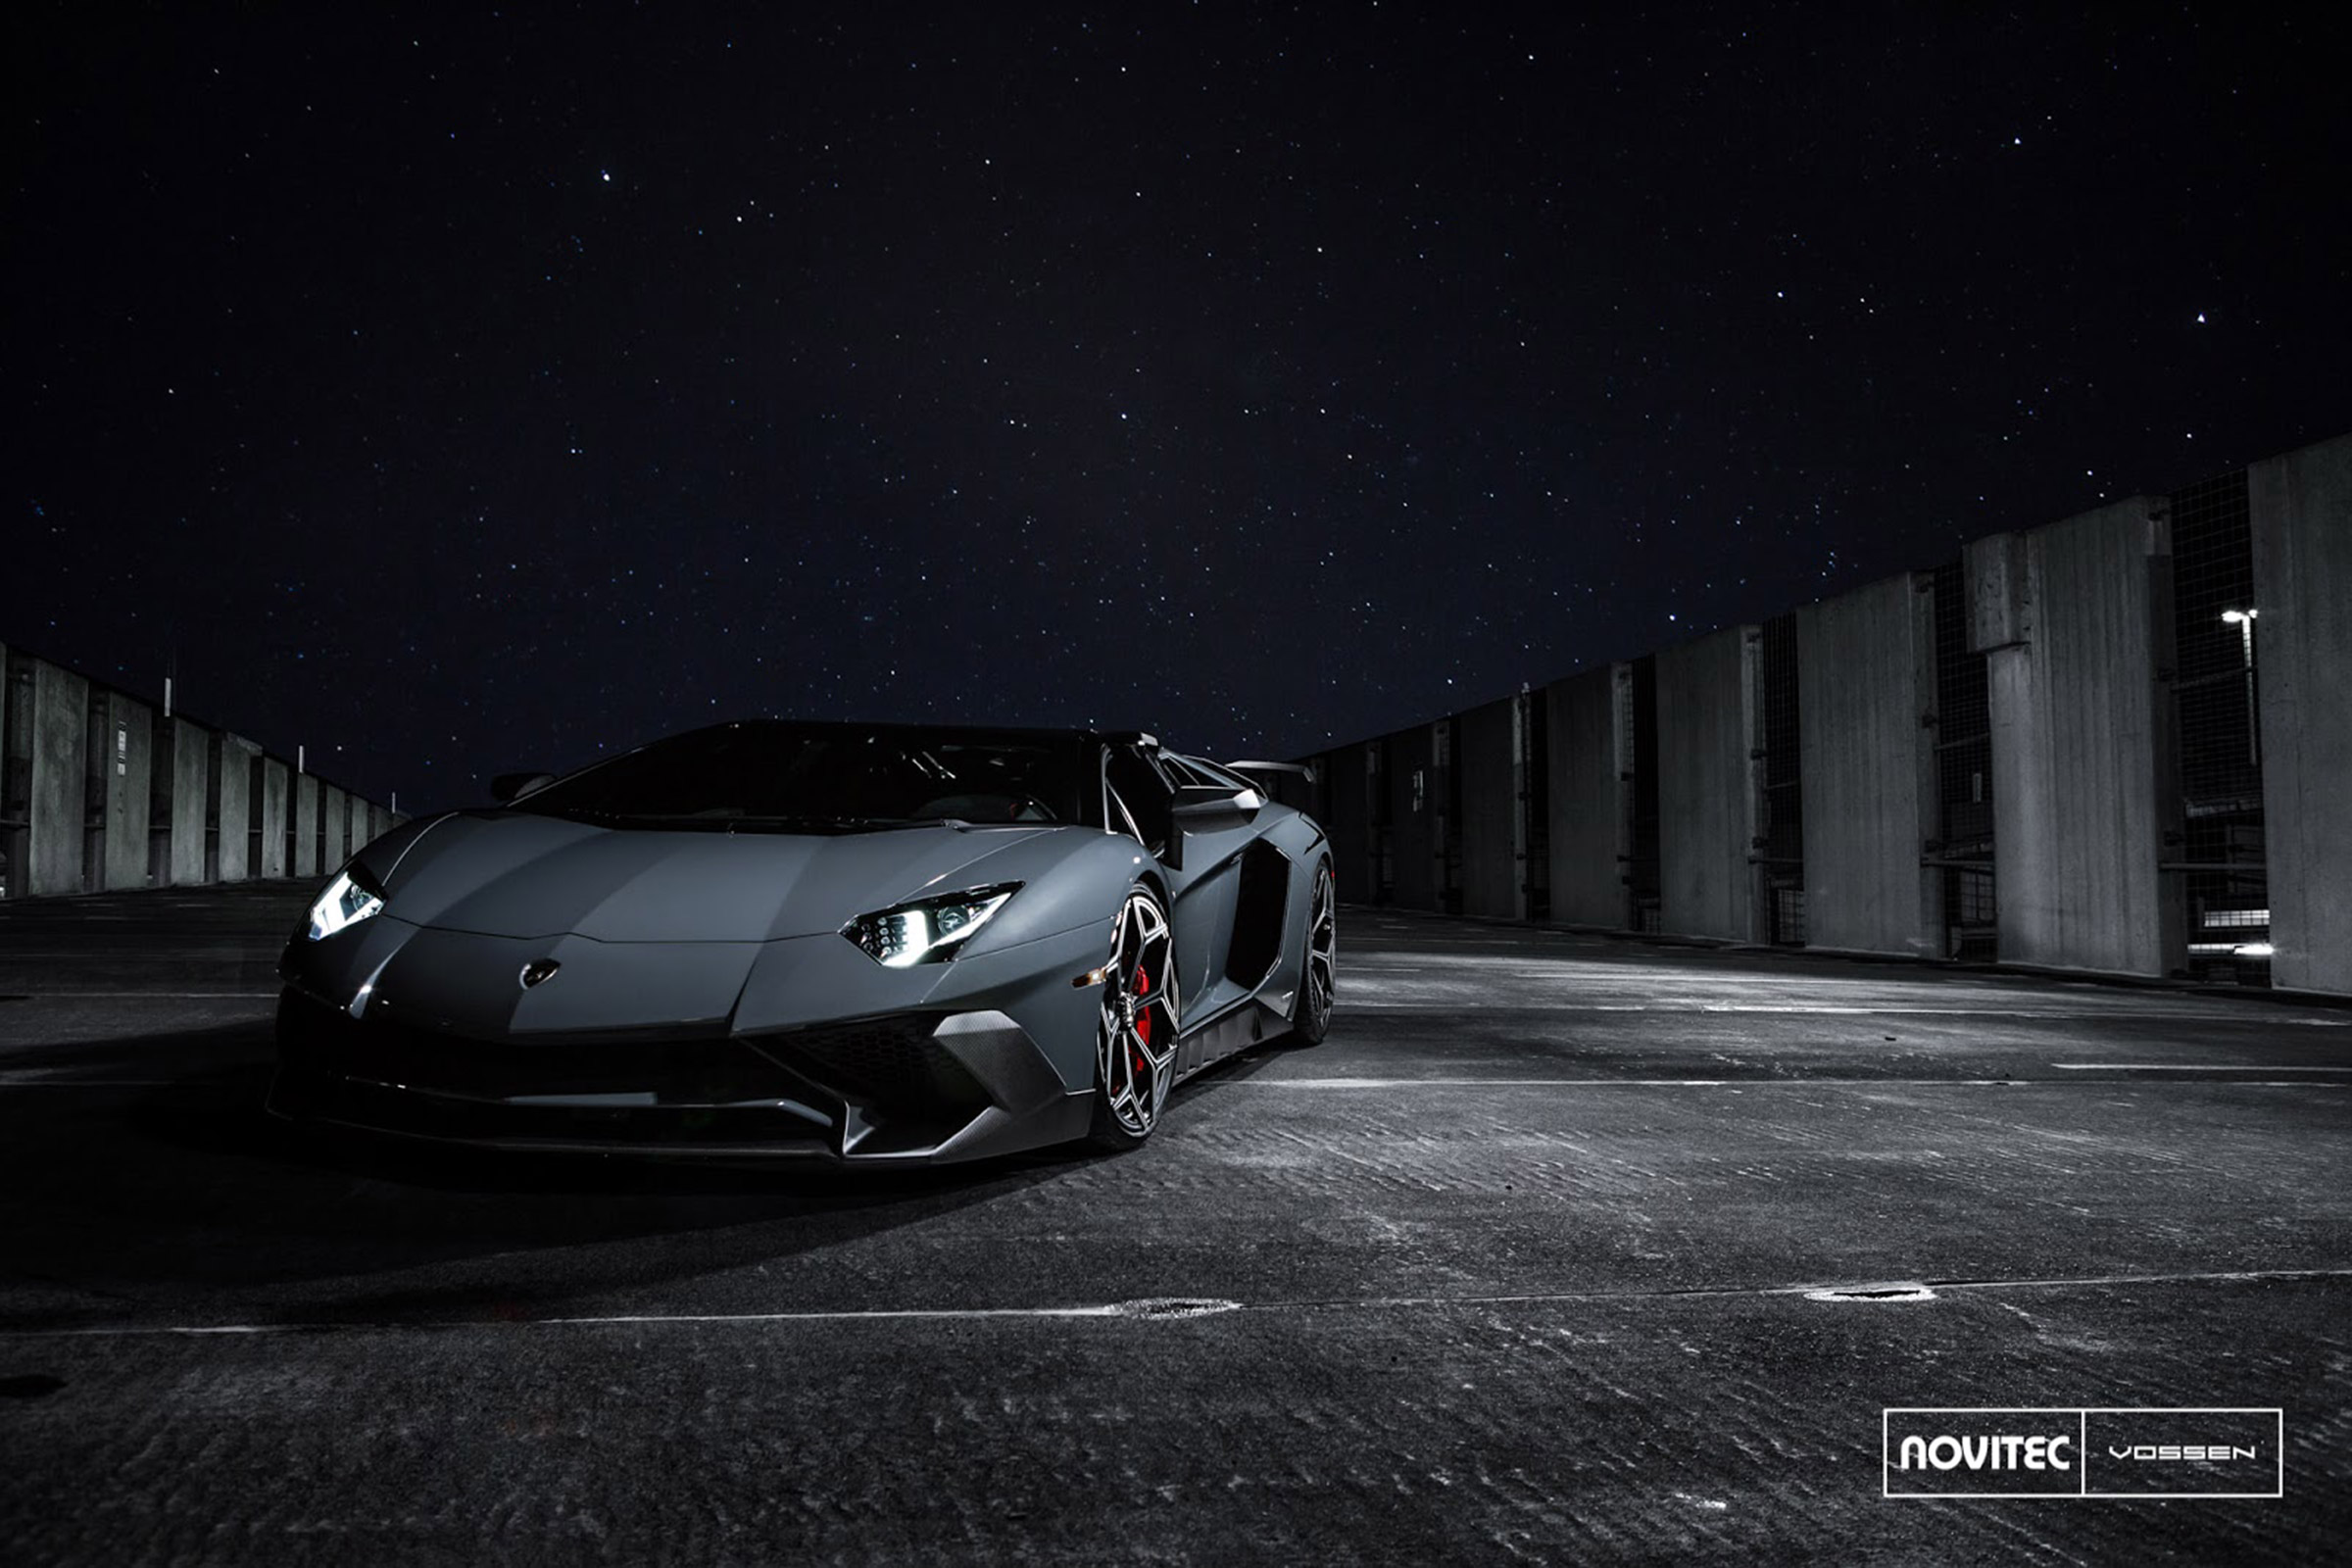 Novitec Lamborghini Aventador SV offers a supercharged 970bhp | evo